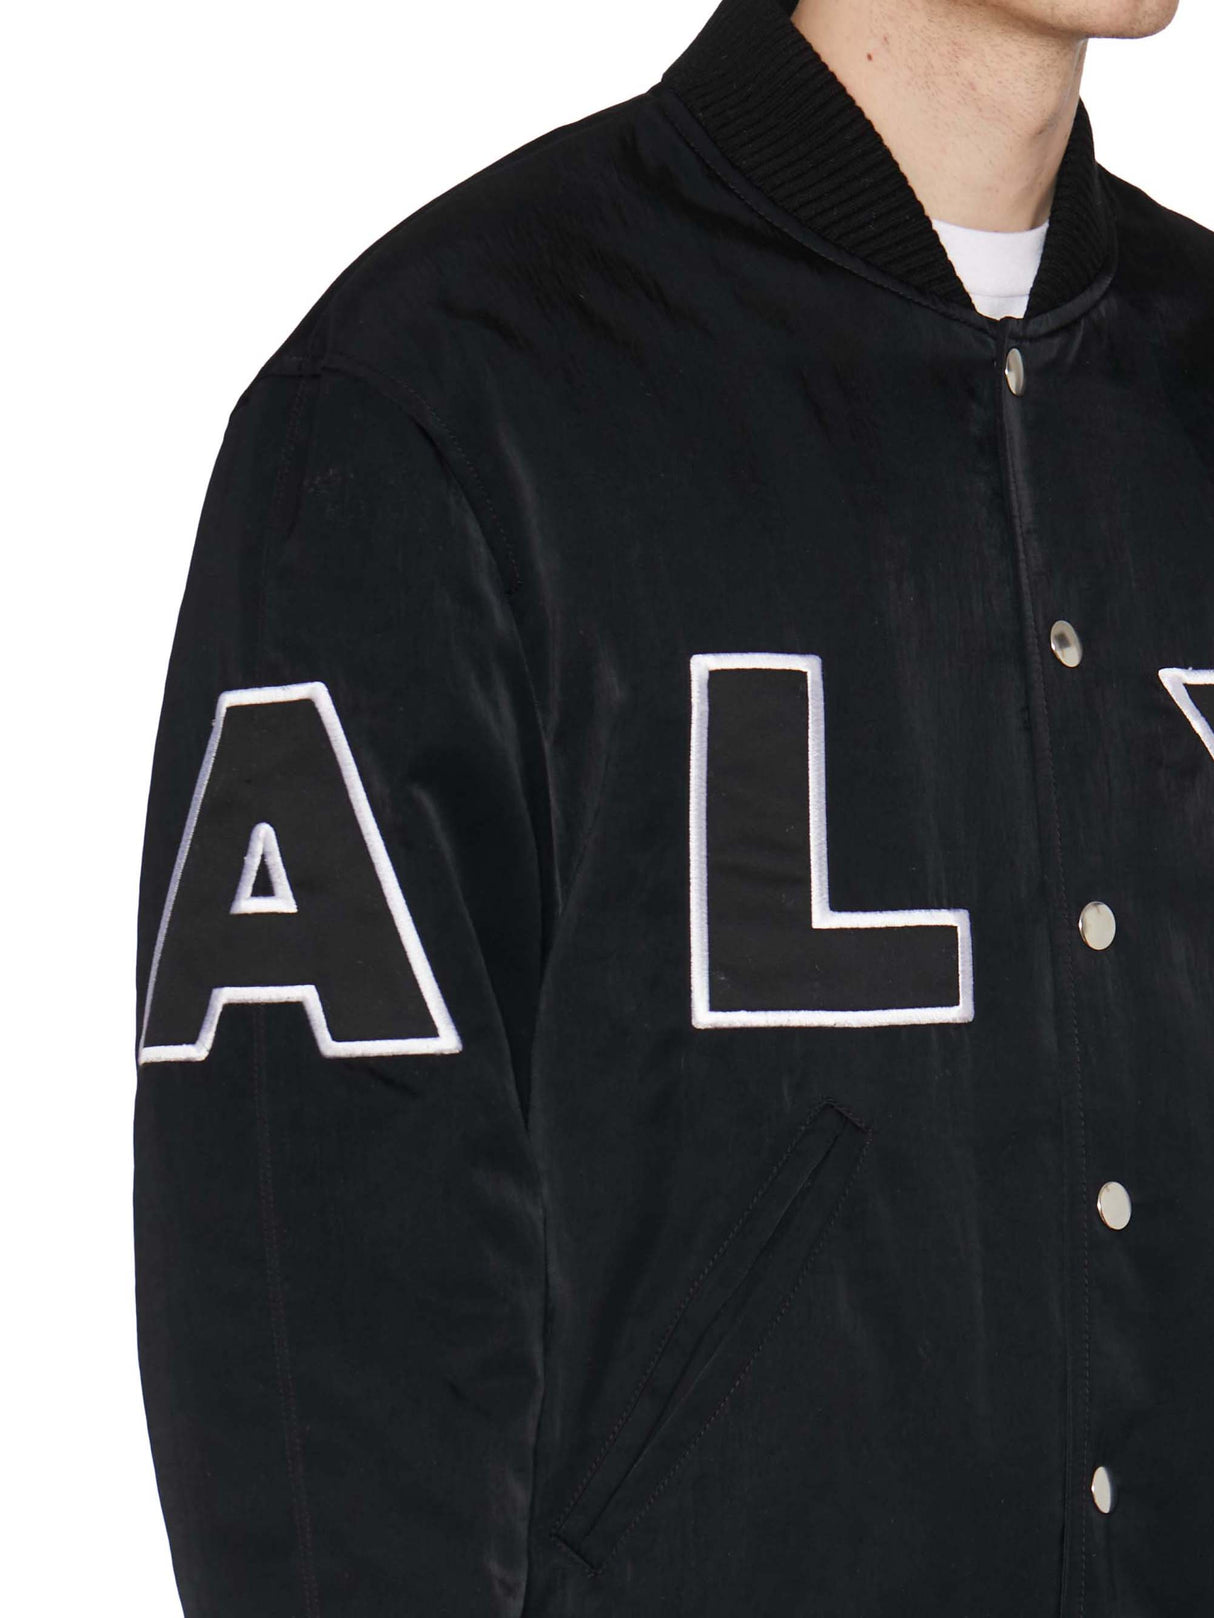 1017 ALYX 9SM Men's Black Varsity Jacket - SS23 Wool Blend with Logo Patch